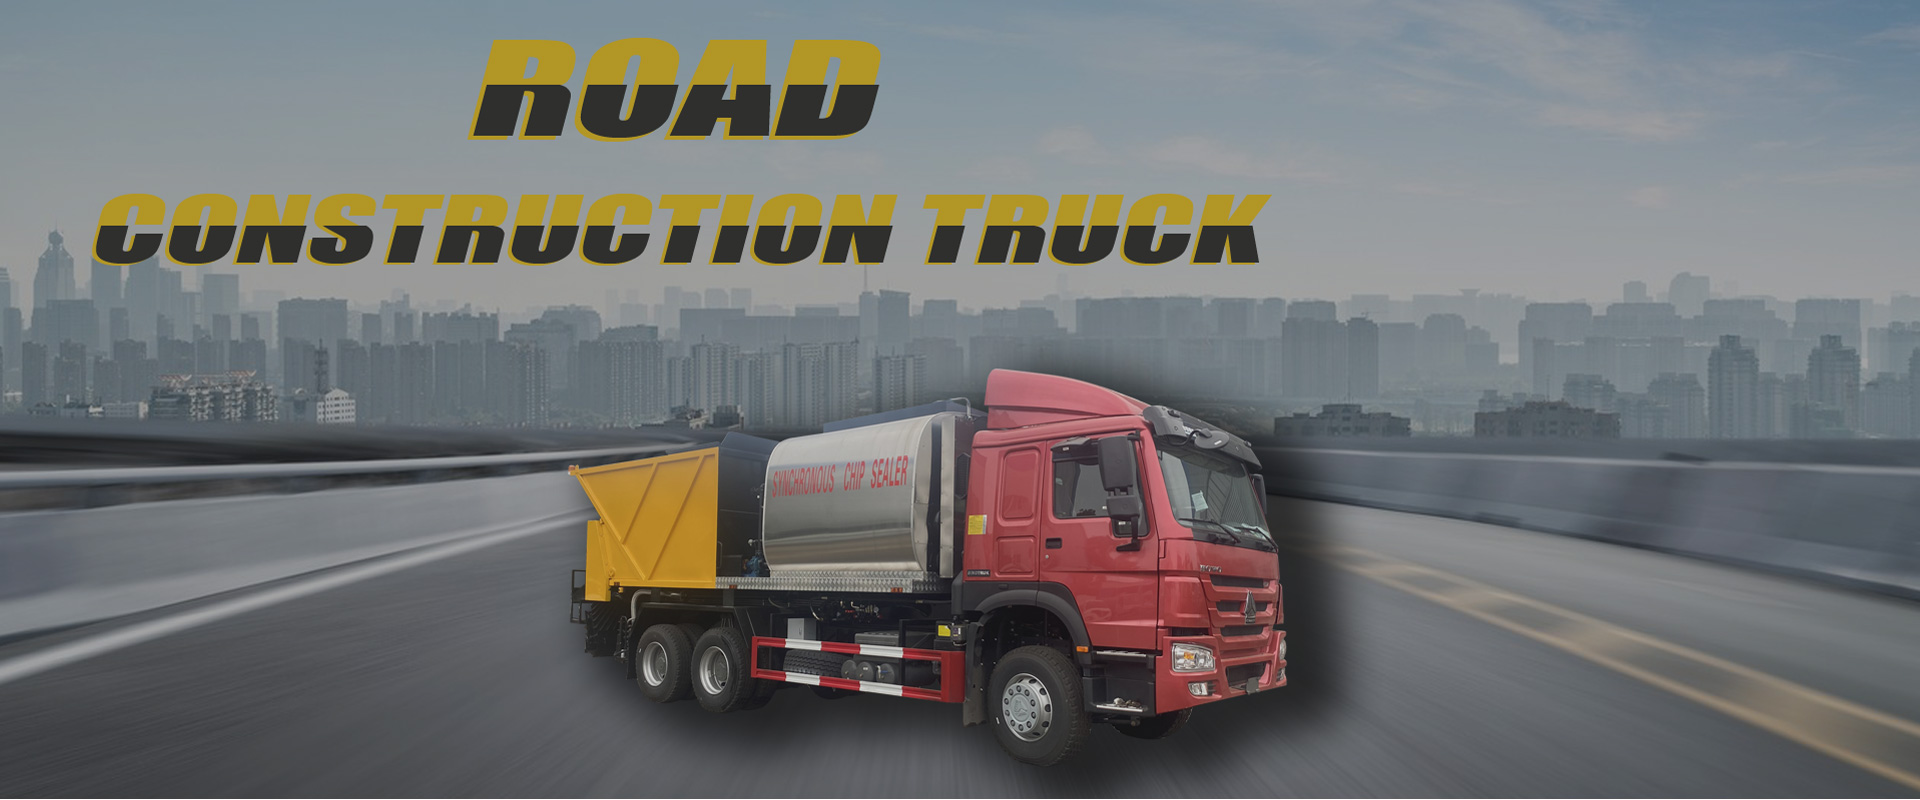 Road Construction Truck